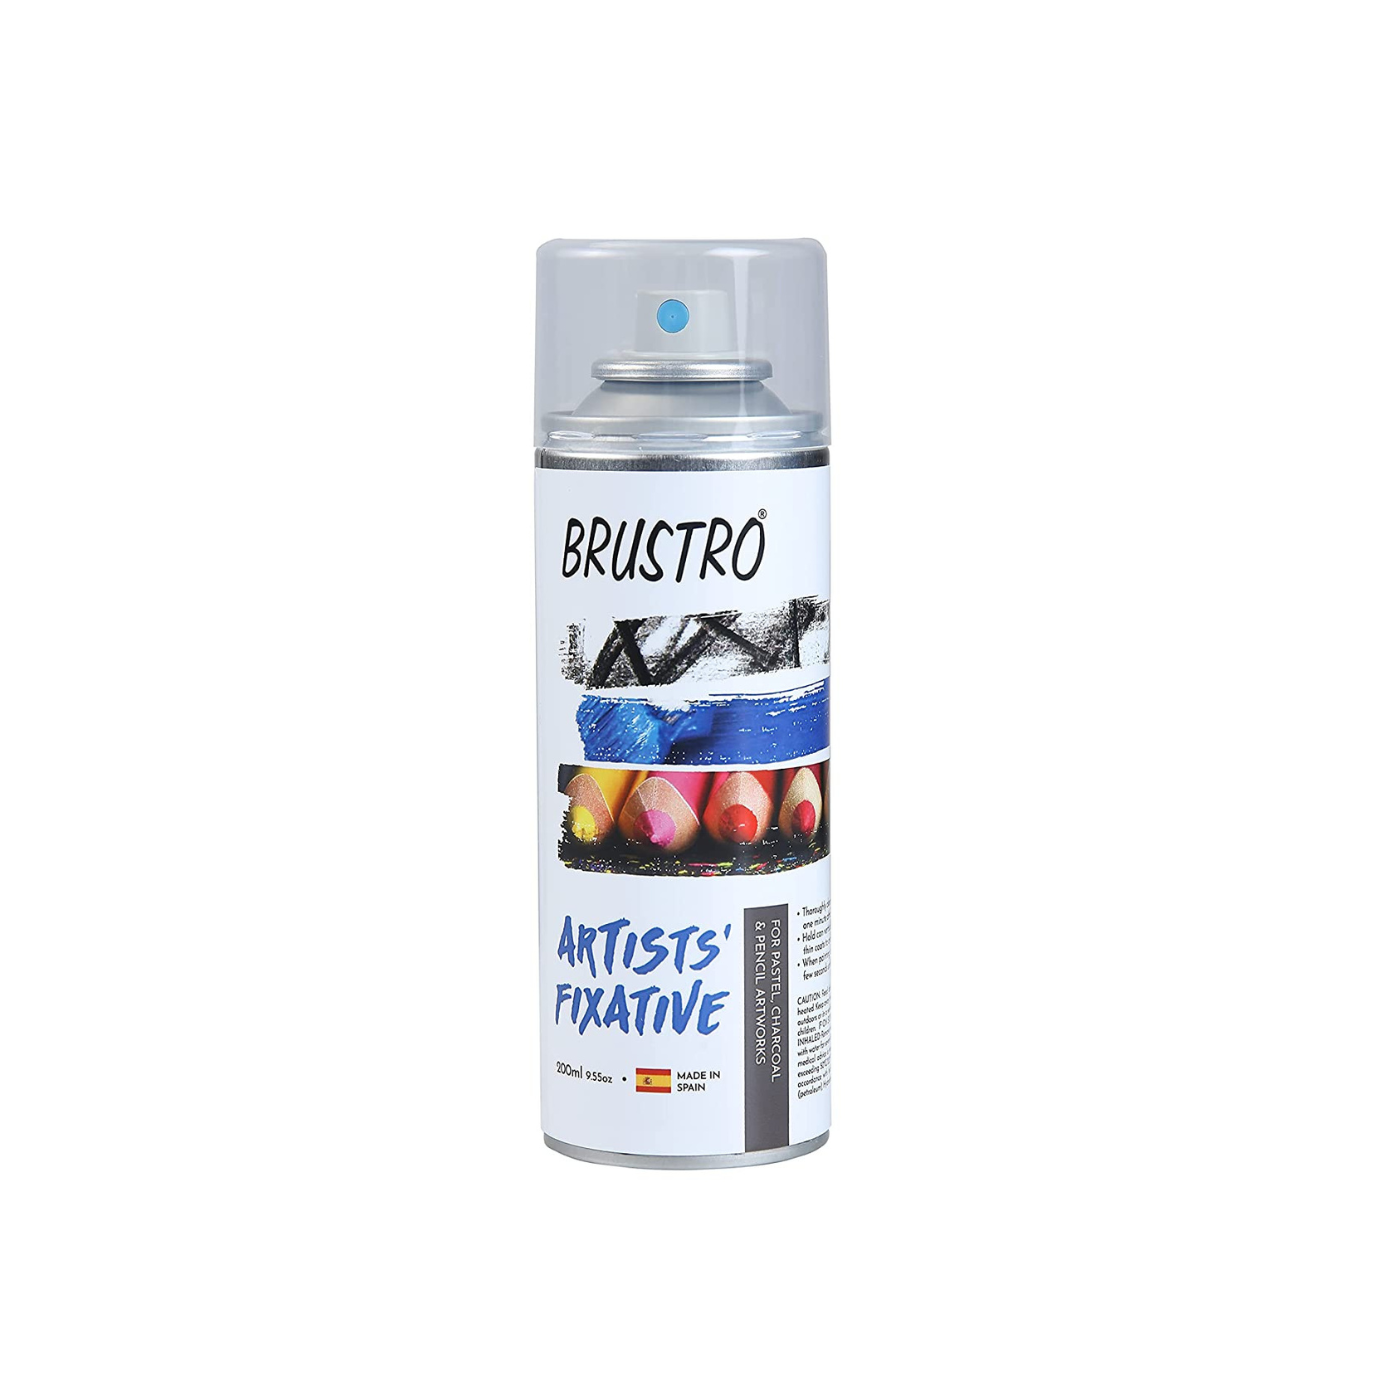 Brustro Artists Fixative - 200 ml Spray can